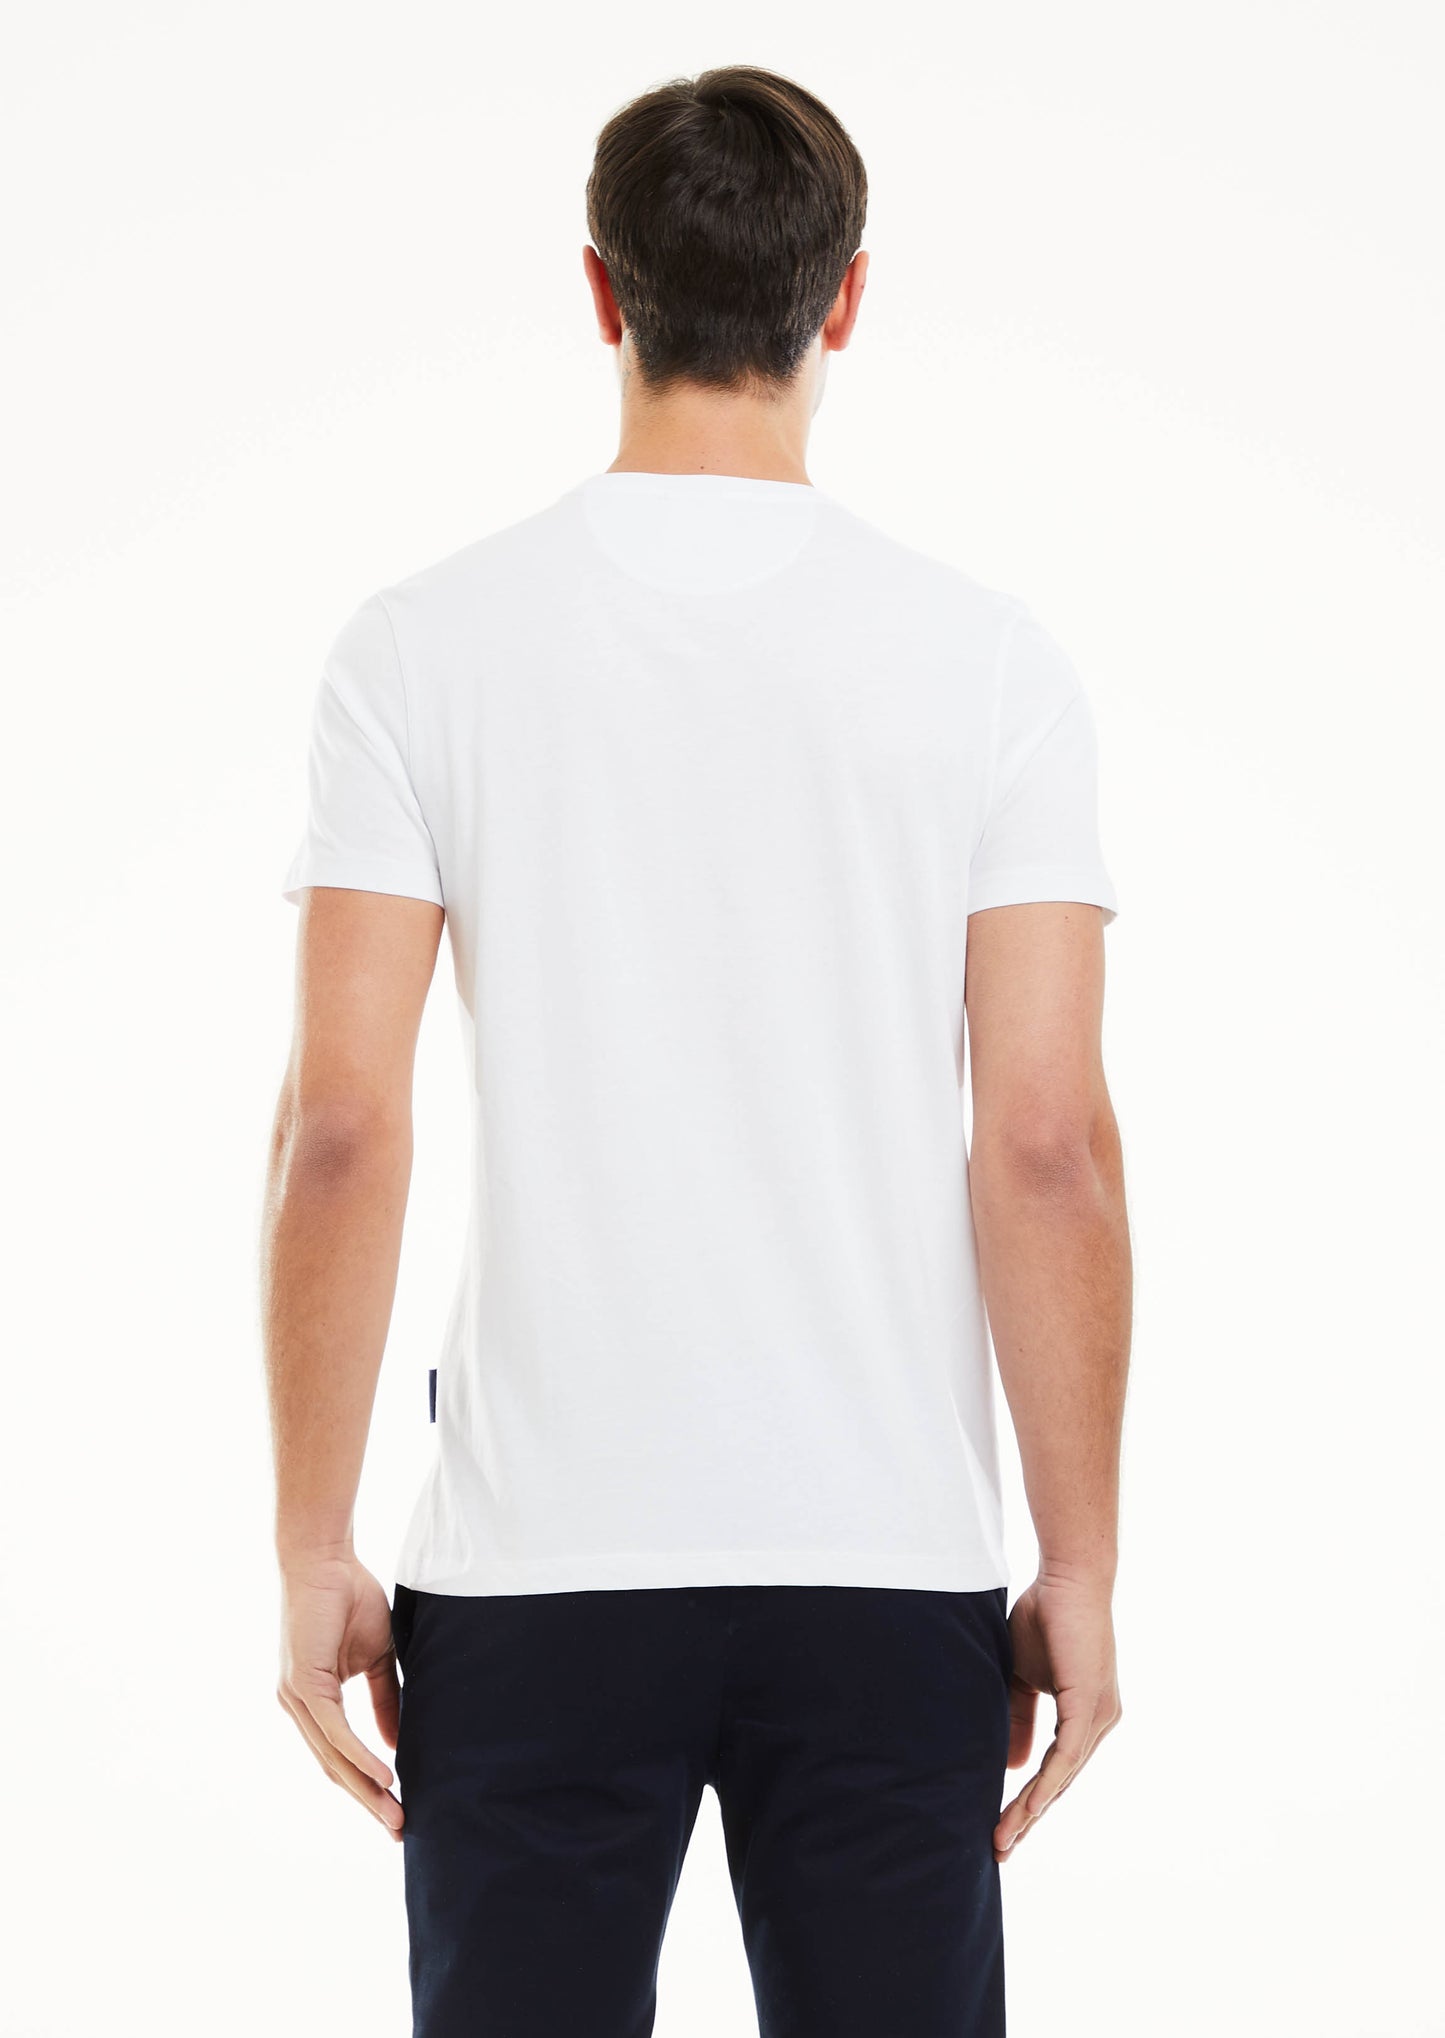 HLPL Printed T-Shirt - White